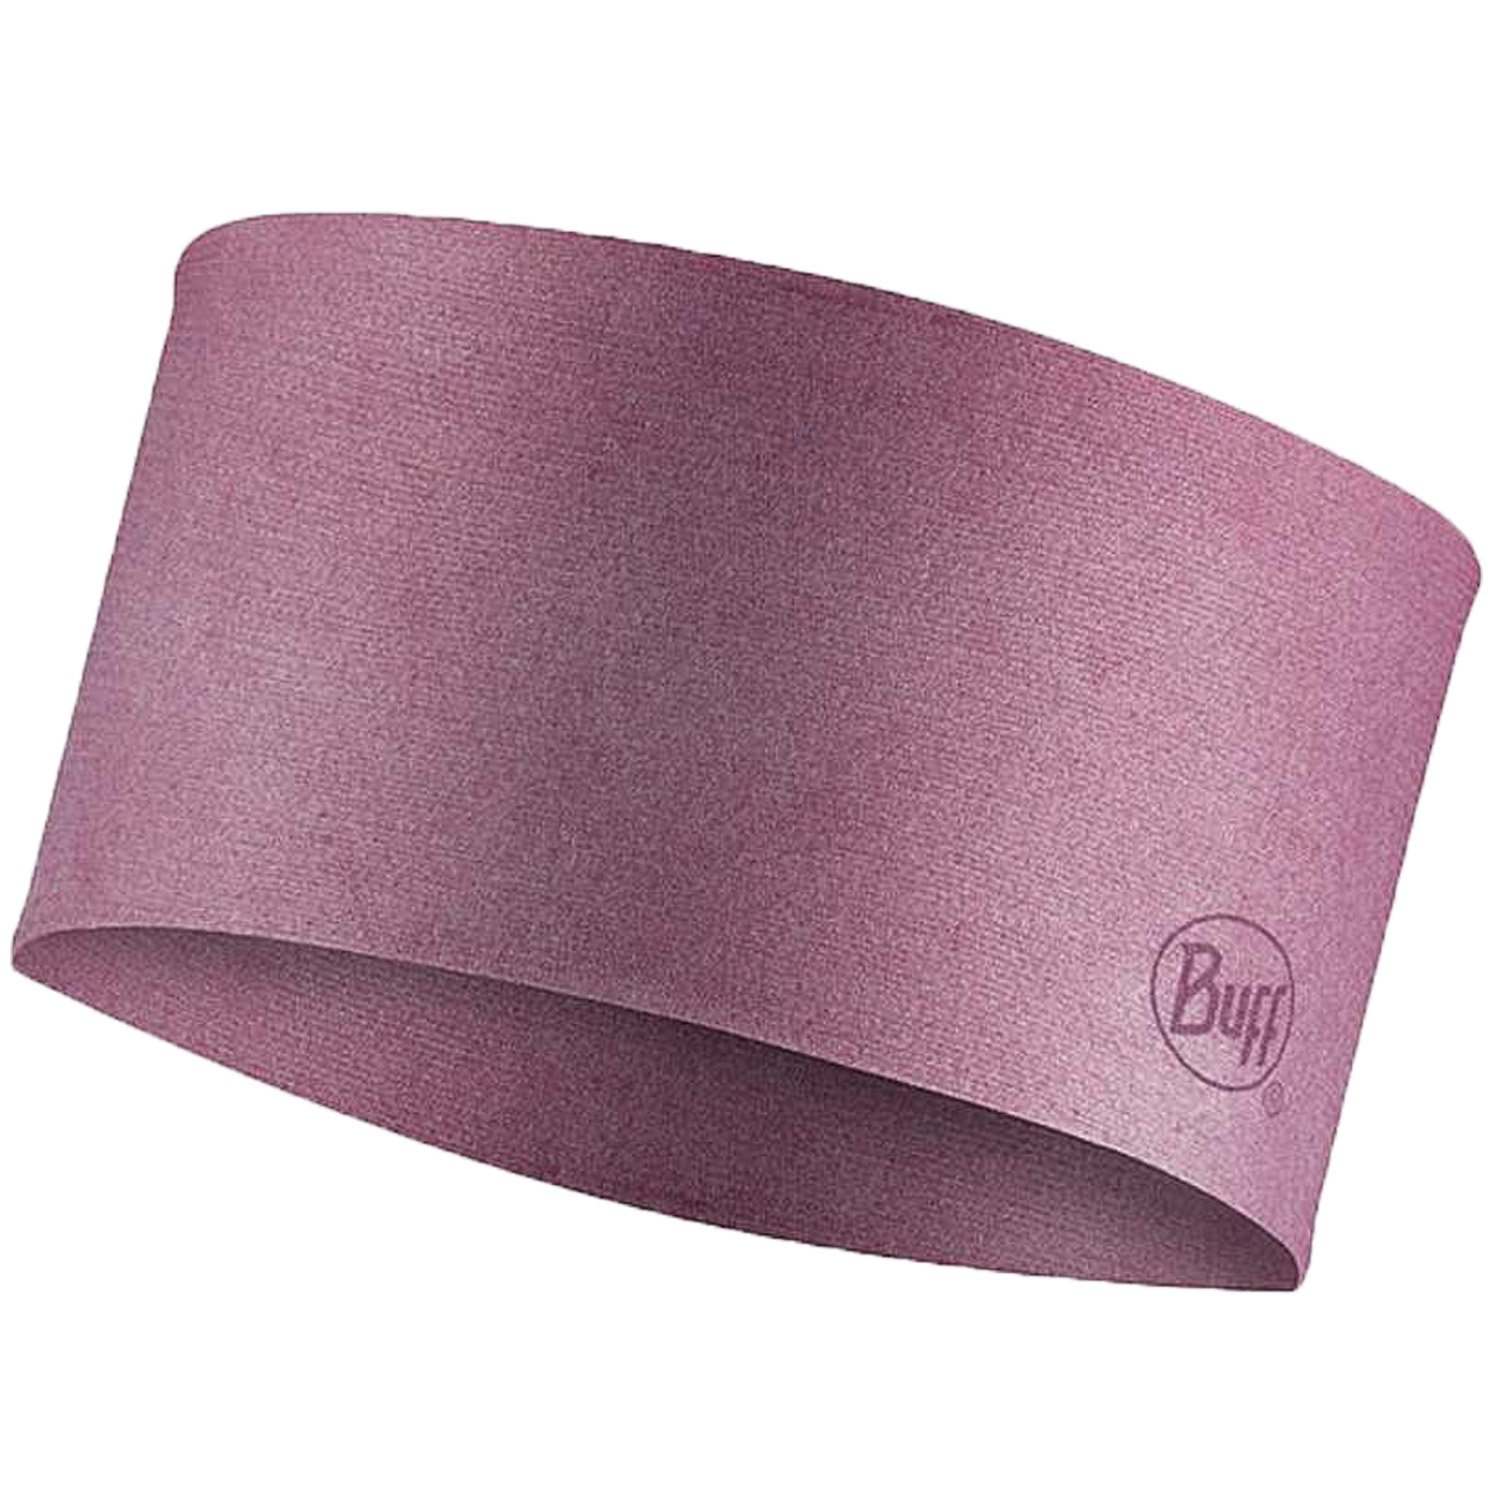 Повязка Buff Coolnet Uv Wide Headband Tulip, розовый, 130056.650.10.00 повязка buff coolnet uv wide headband seary purple 128746 605 10 00